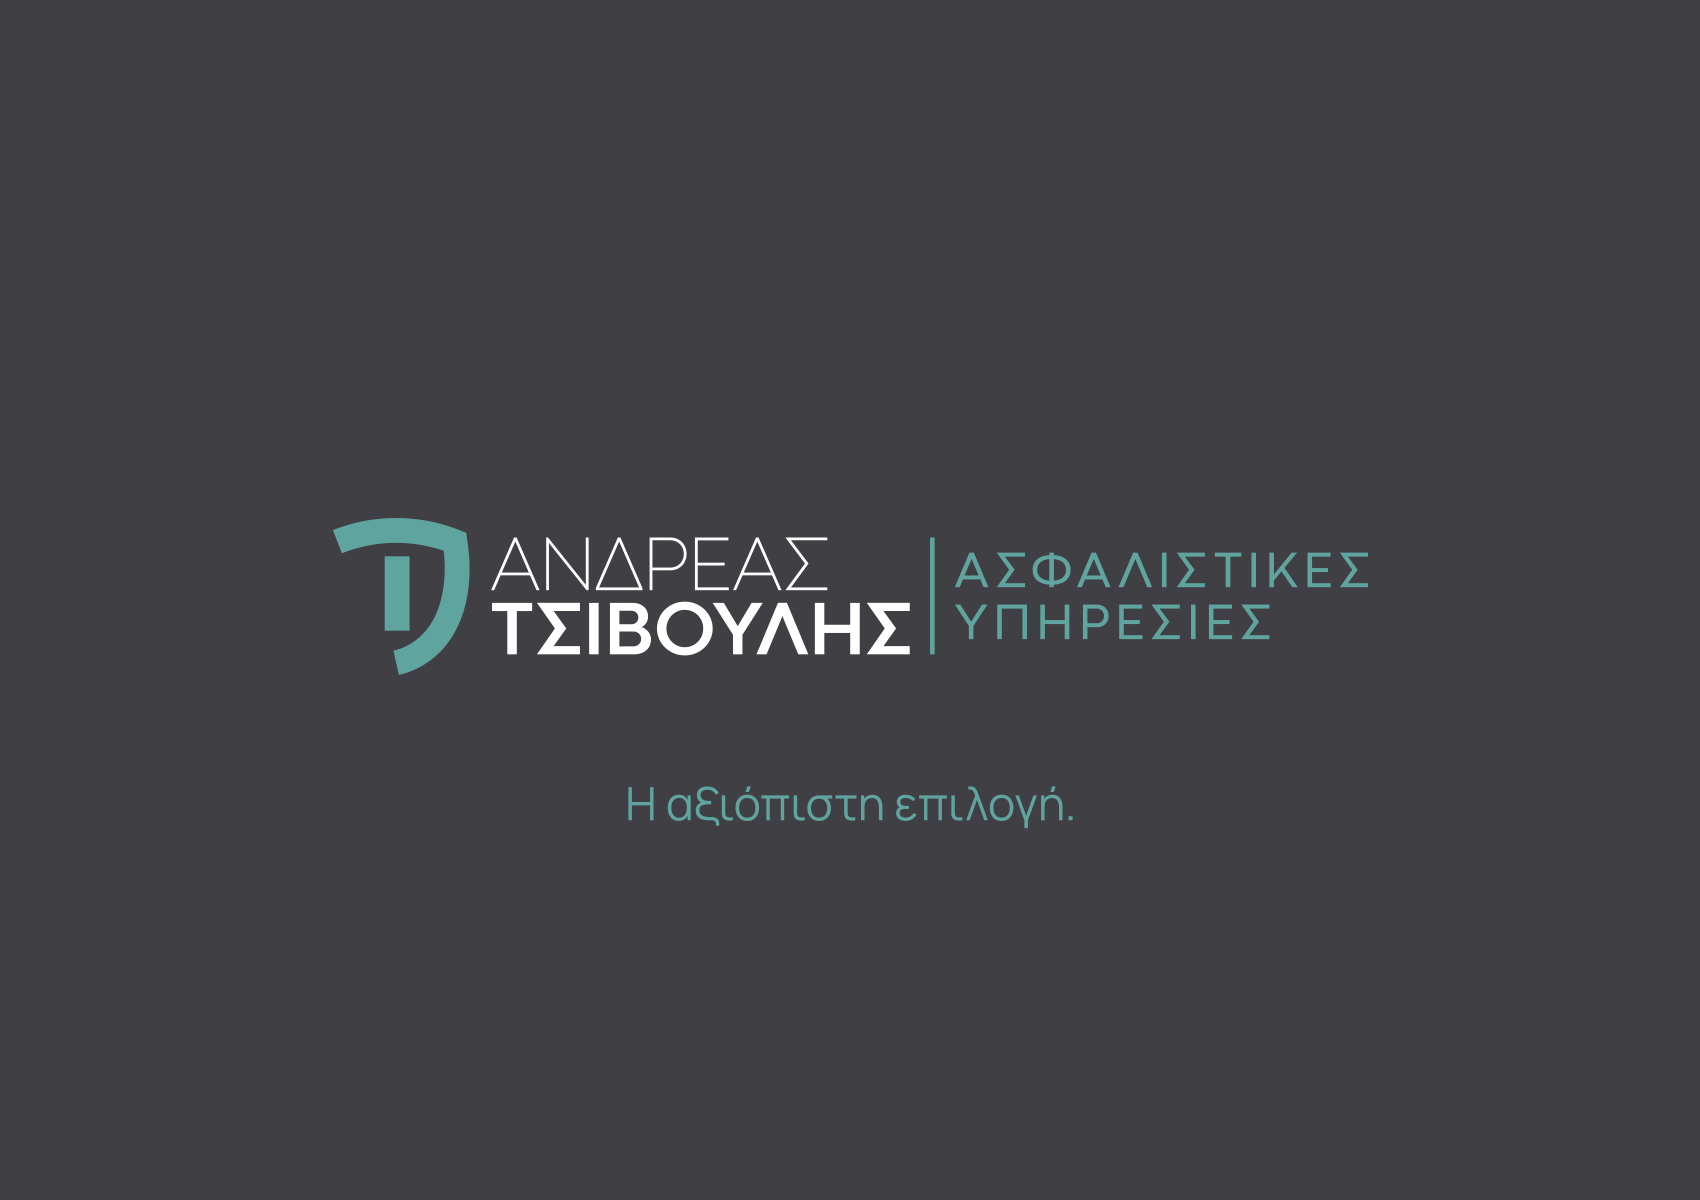 Andreas Tsivoulis logo grey 1700x1200 by xhristakis